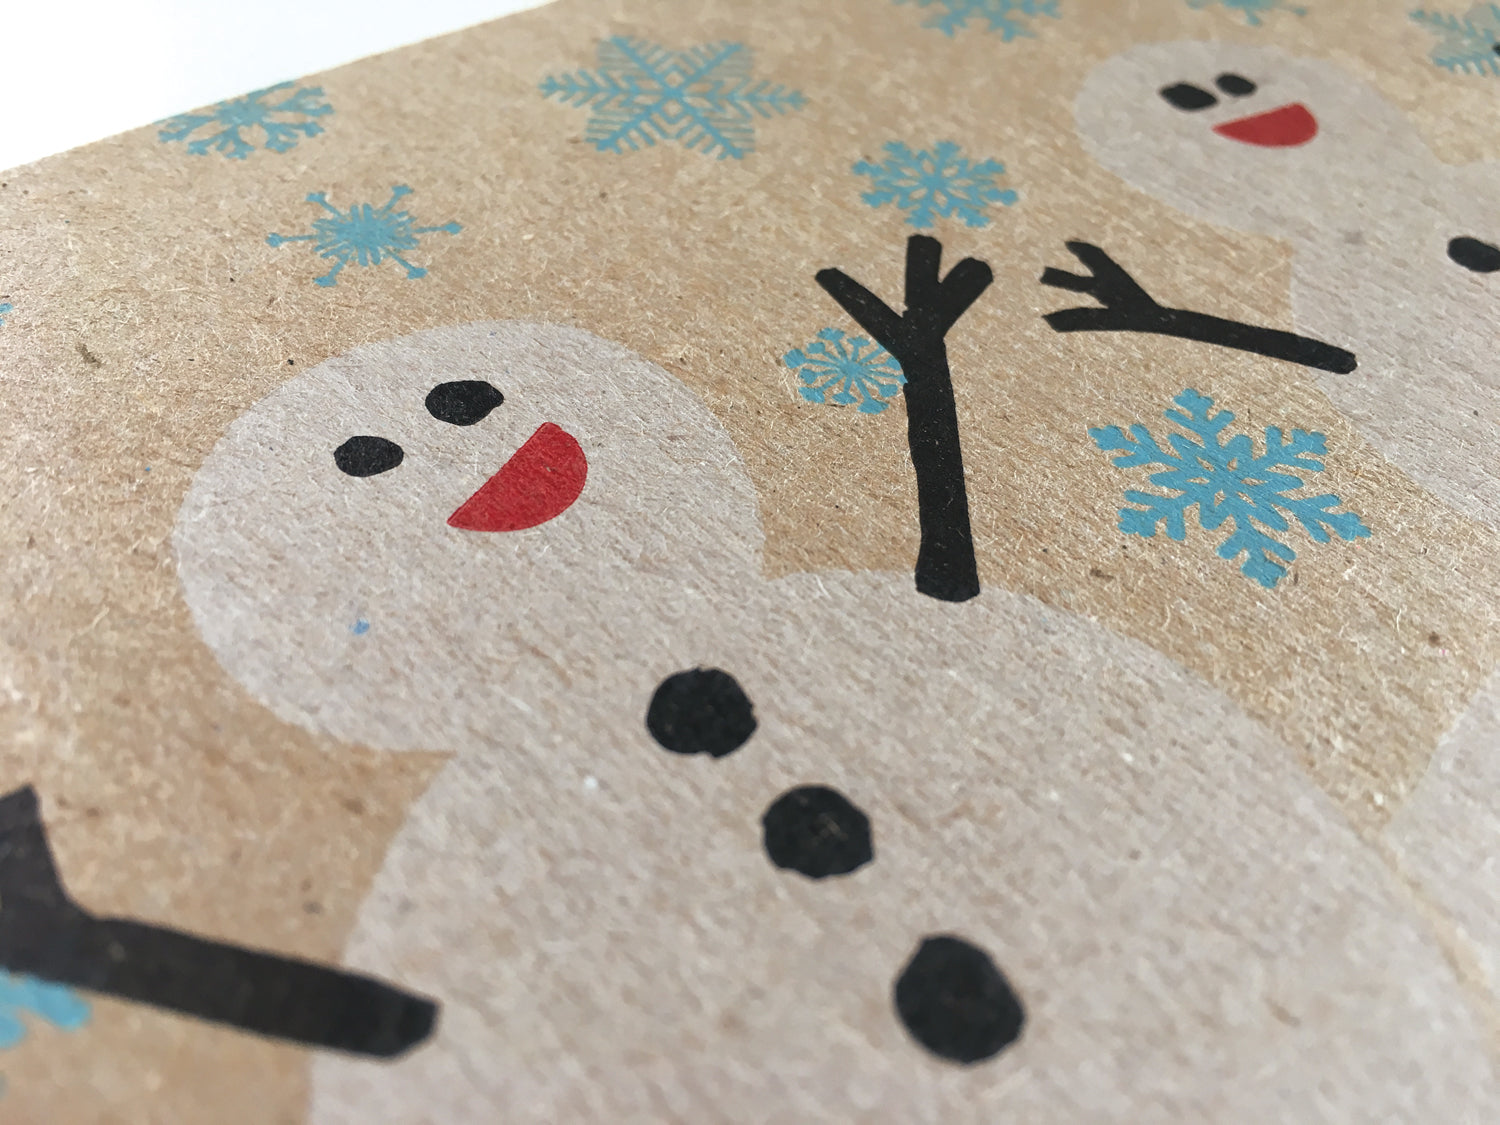 Snowmen Holiday Card, Letterpress Printed, single-sided, 5x7